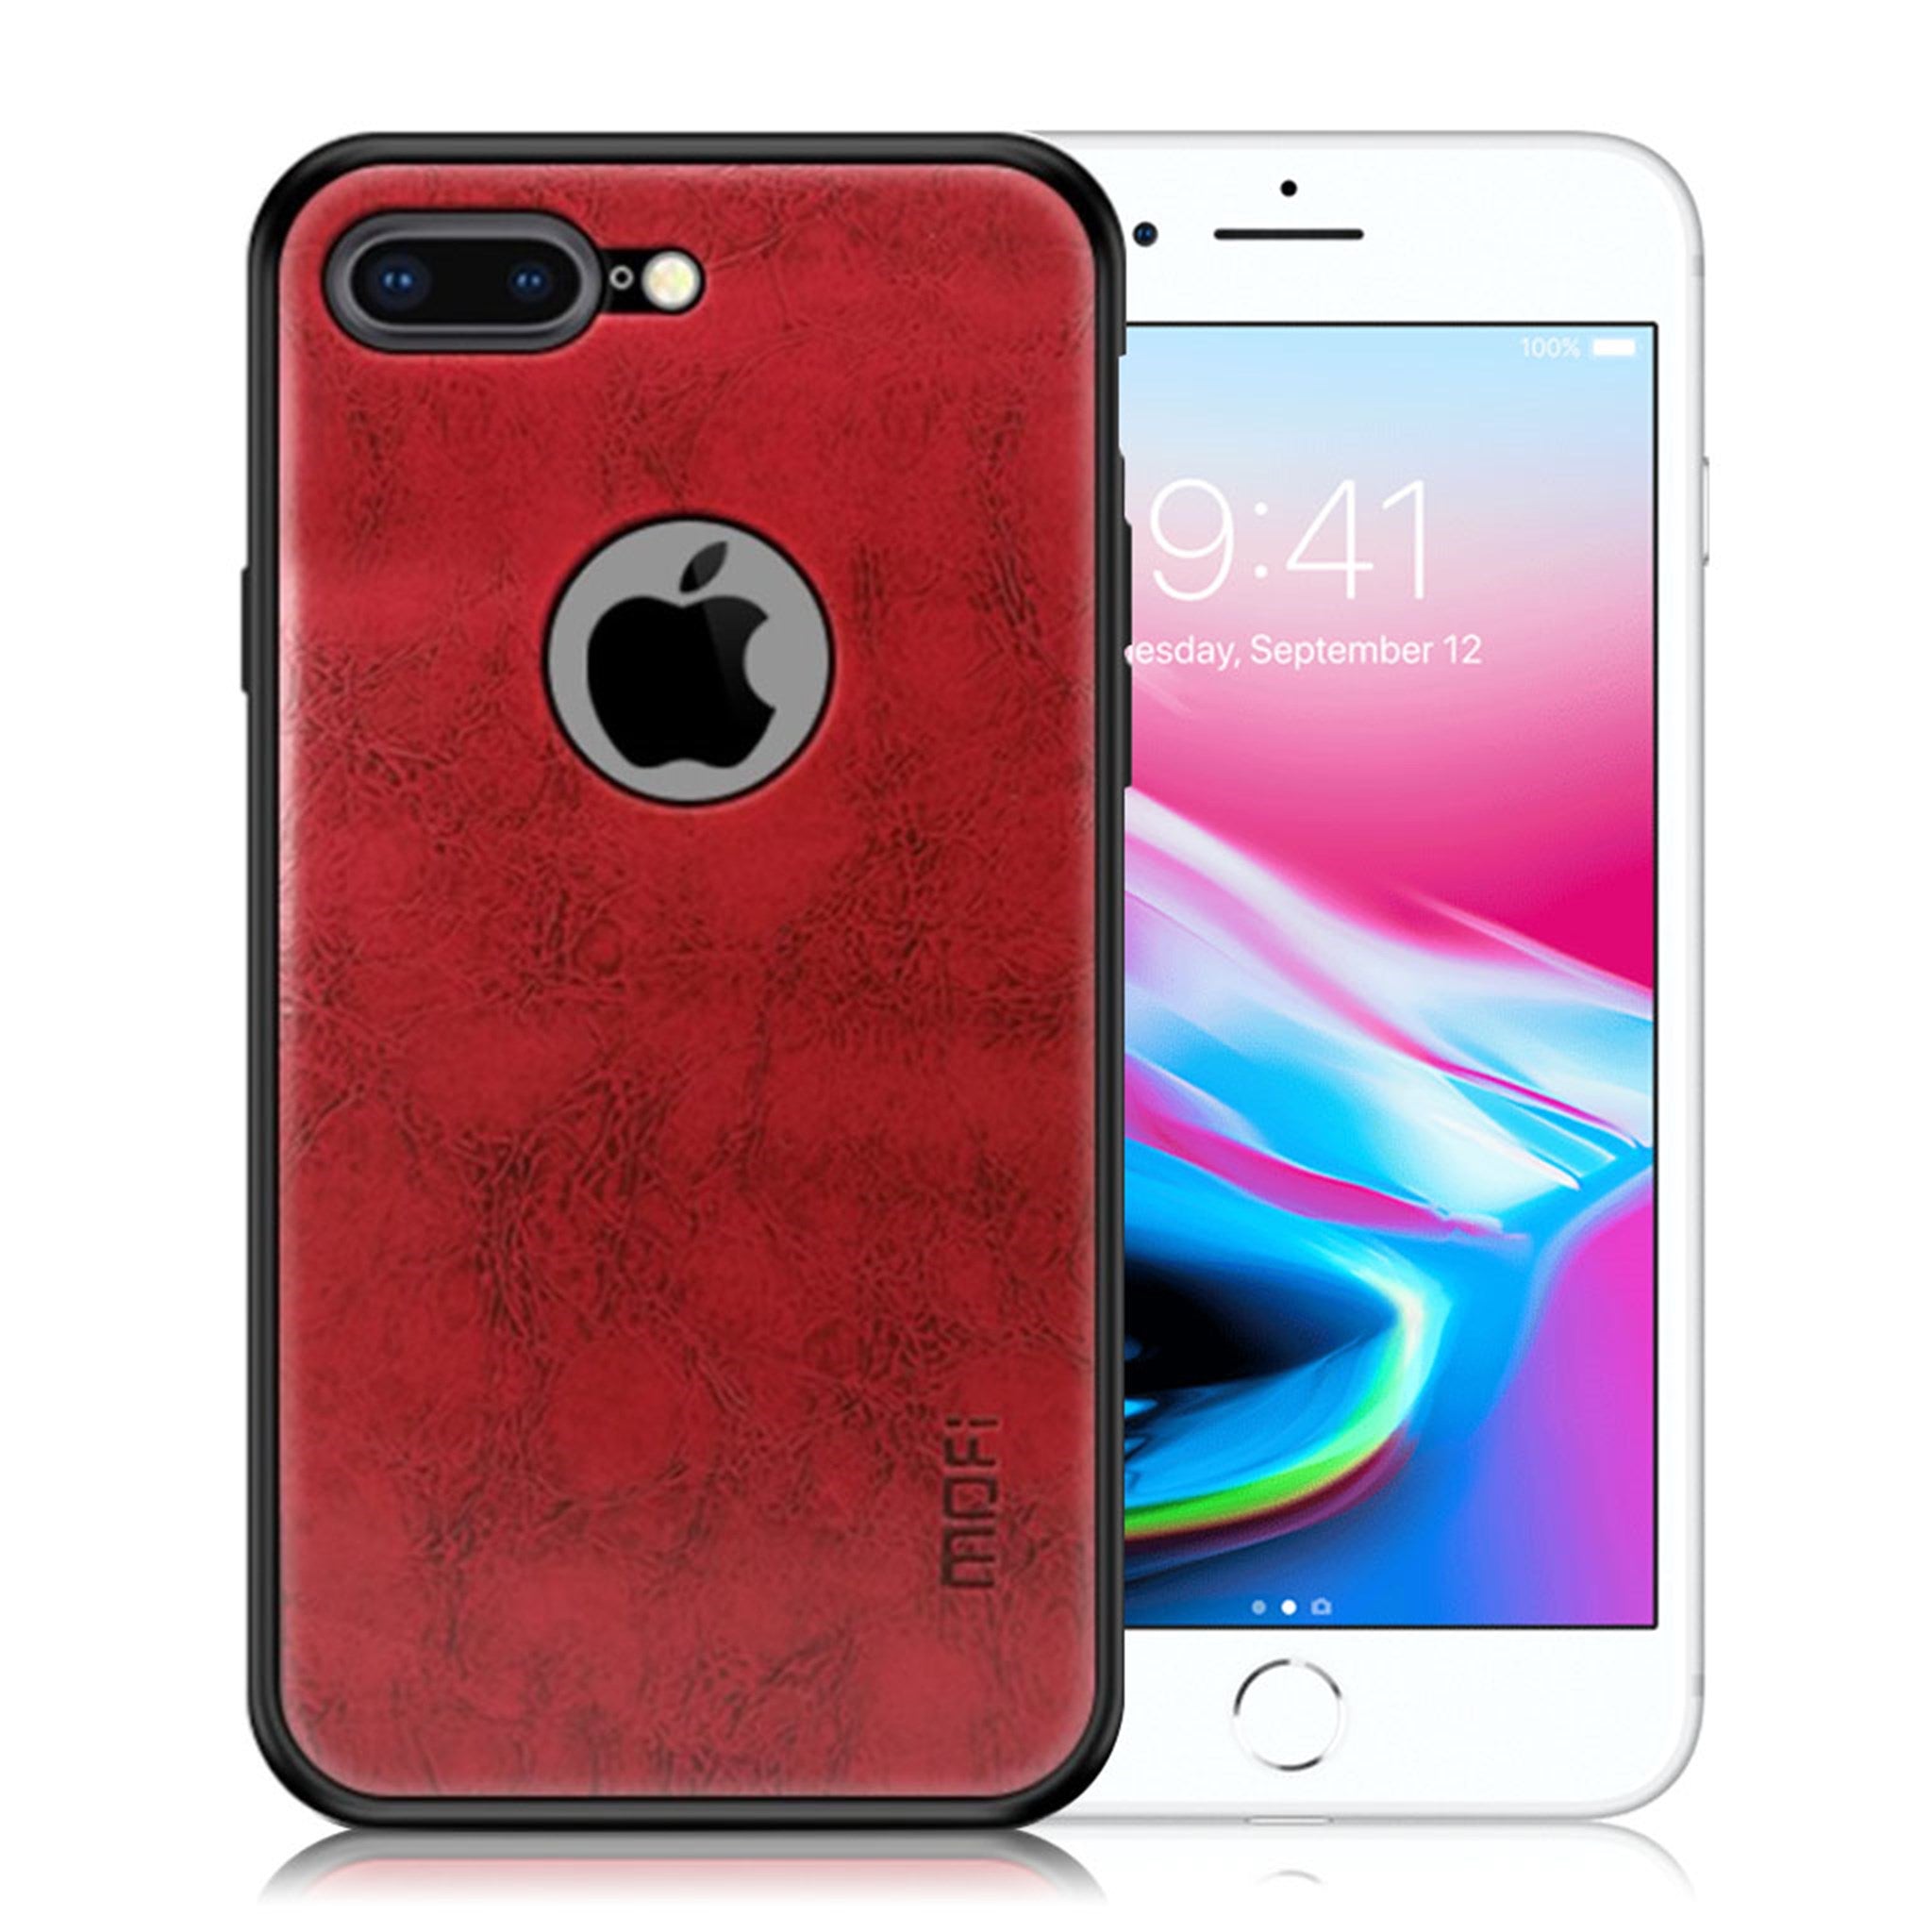 MOFI iPhone 7 Plus / 8 Plus leather coated hybrid case - Red